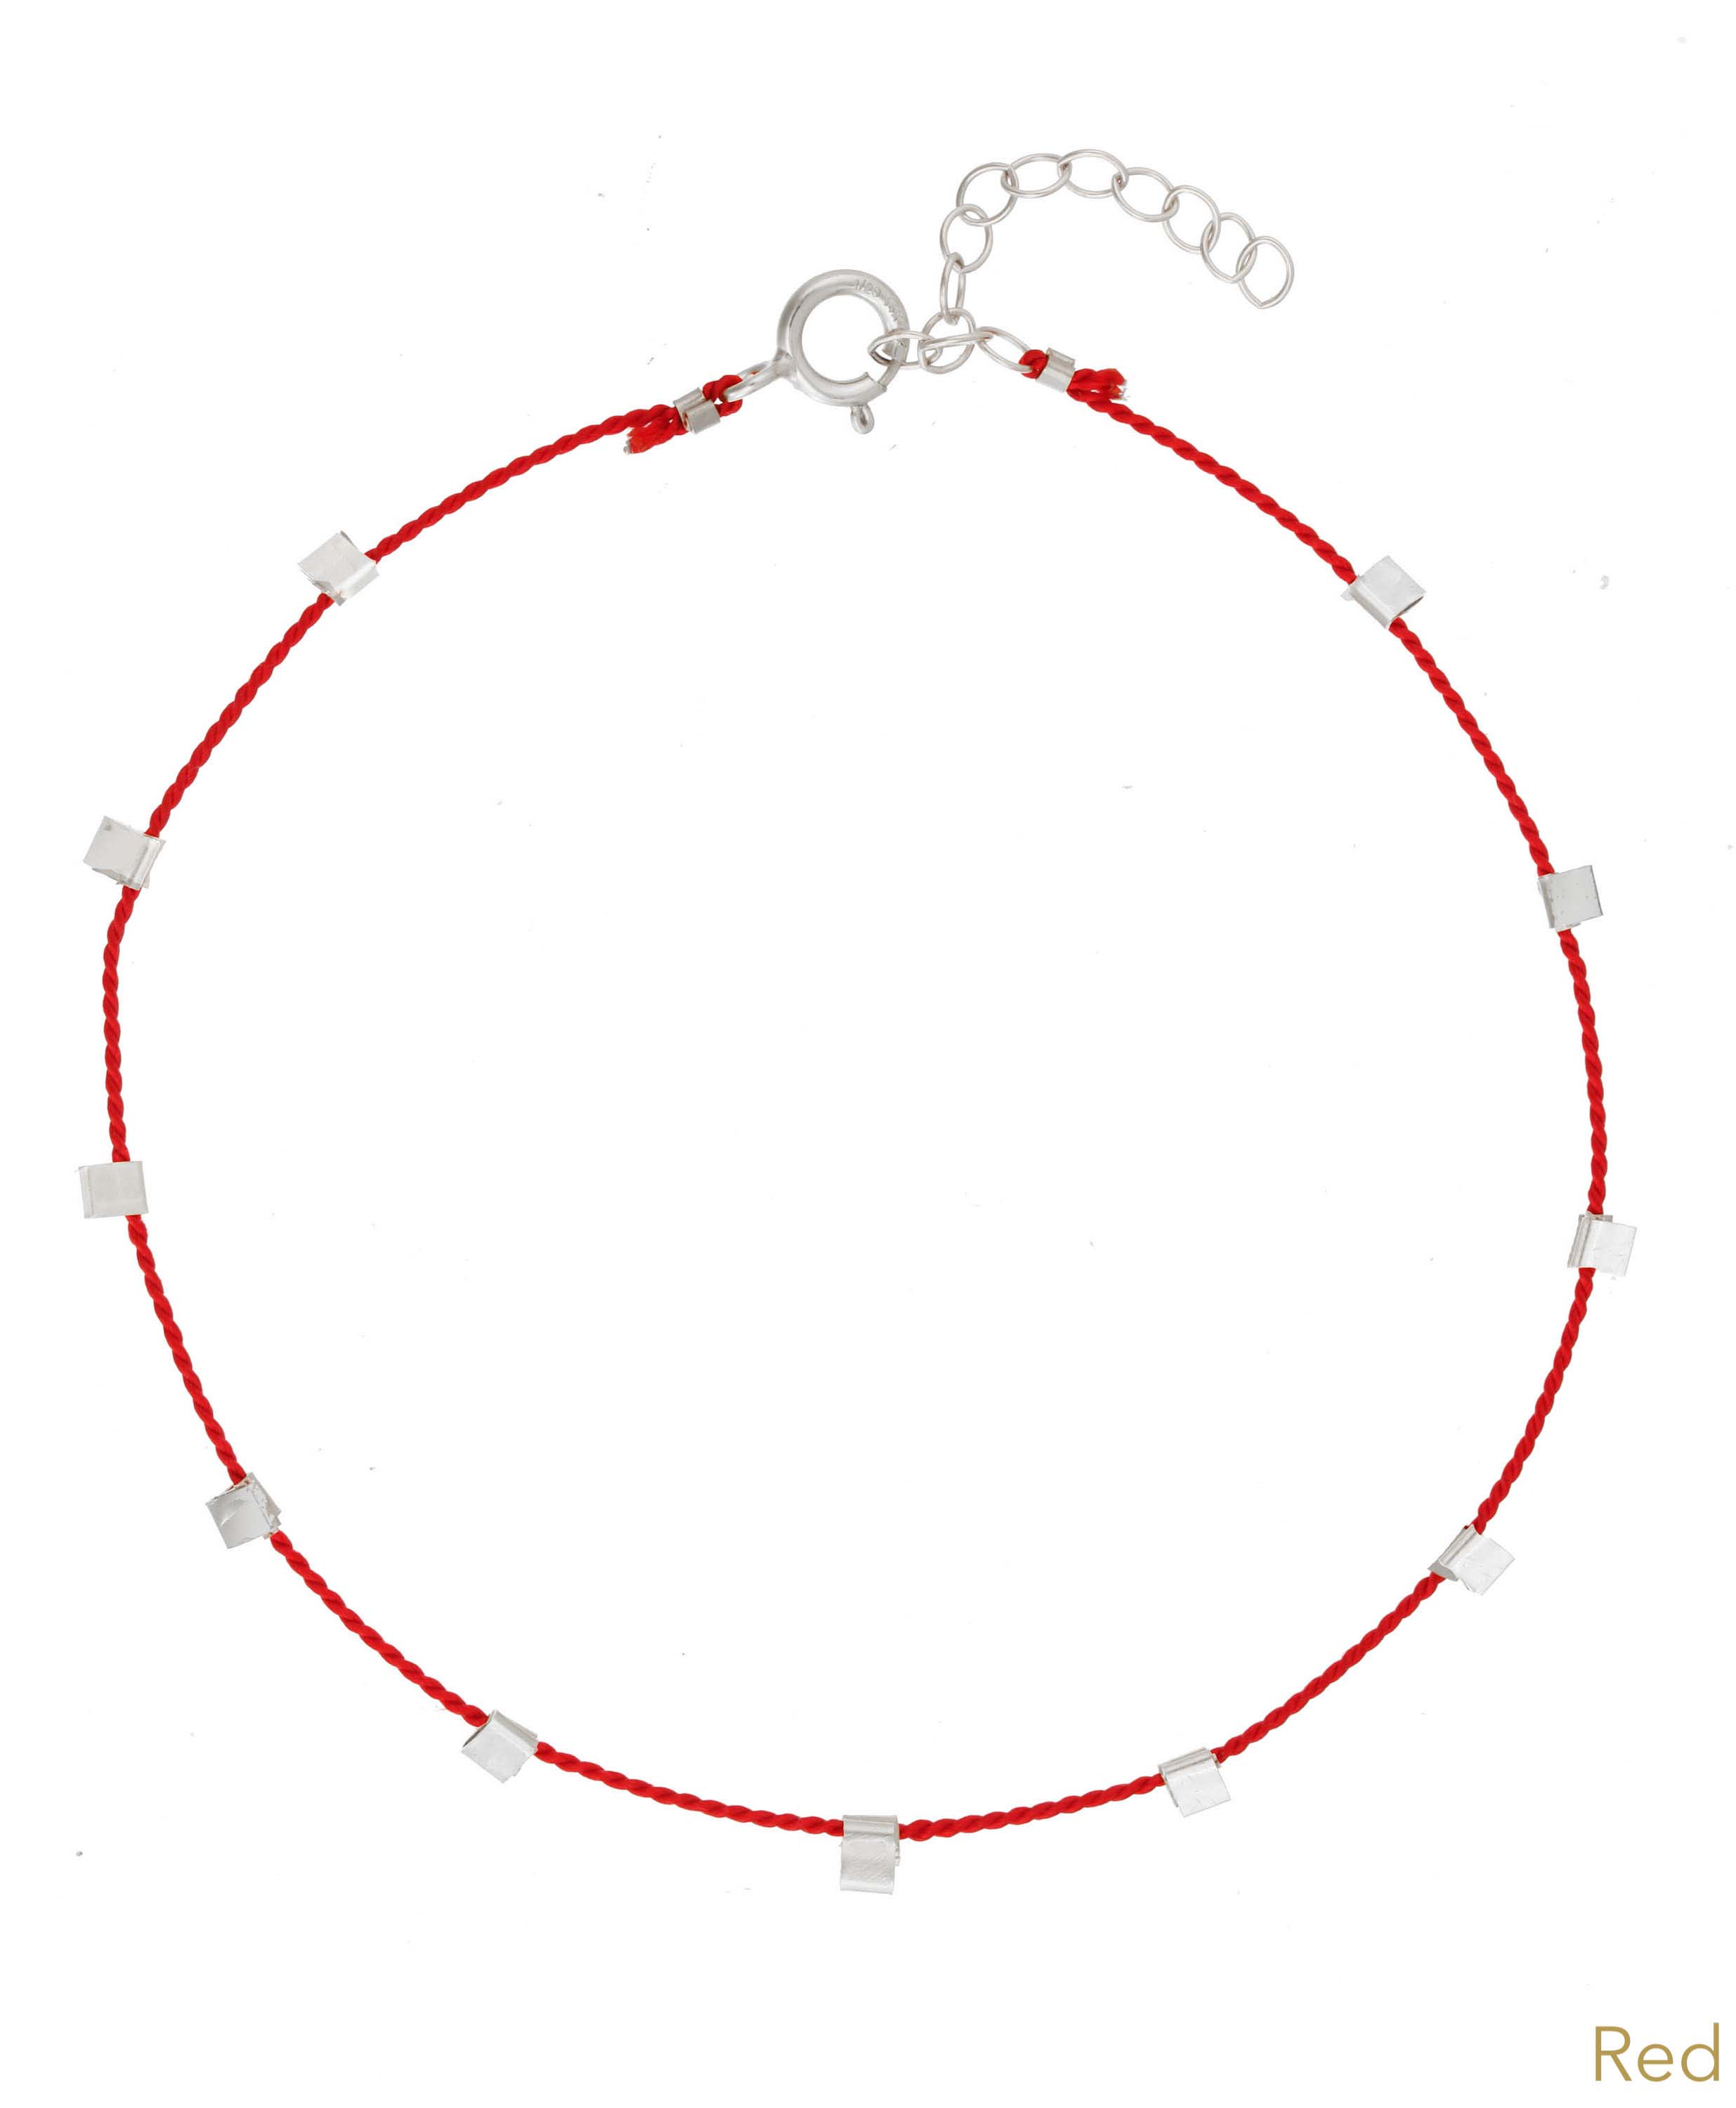 Hilo Bracelet by KOZAKH. A 6 to 7 inch adjustable length natural silk thread bracelet, embellished with Sterling Silver metals.